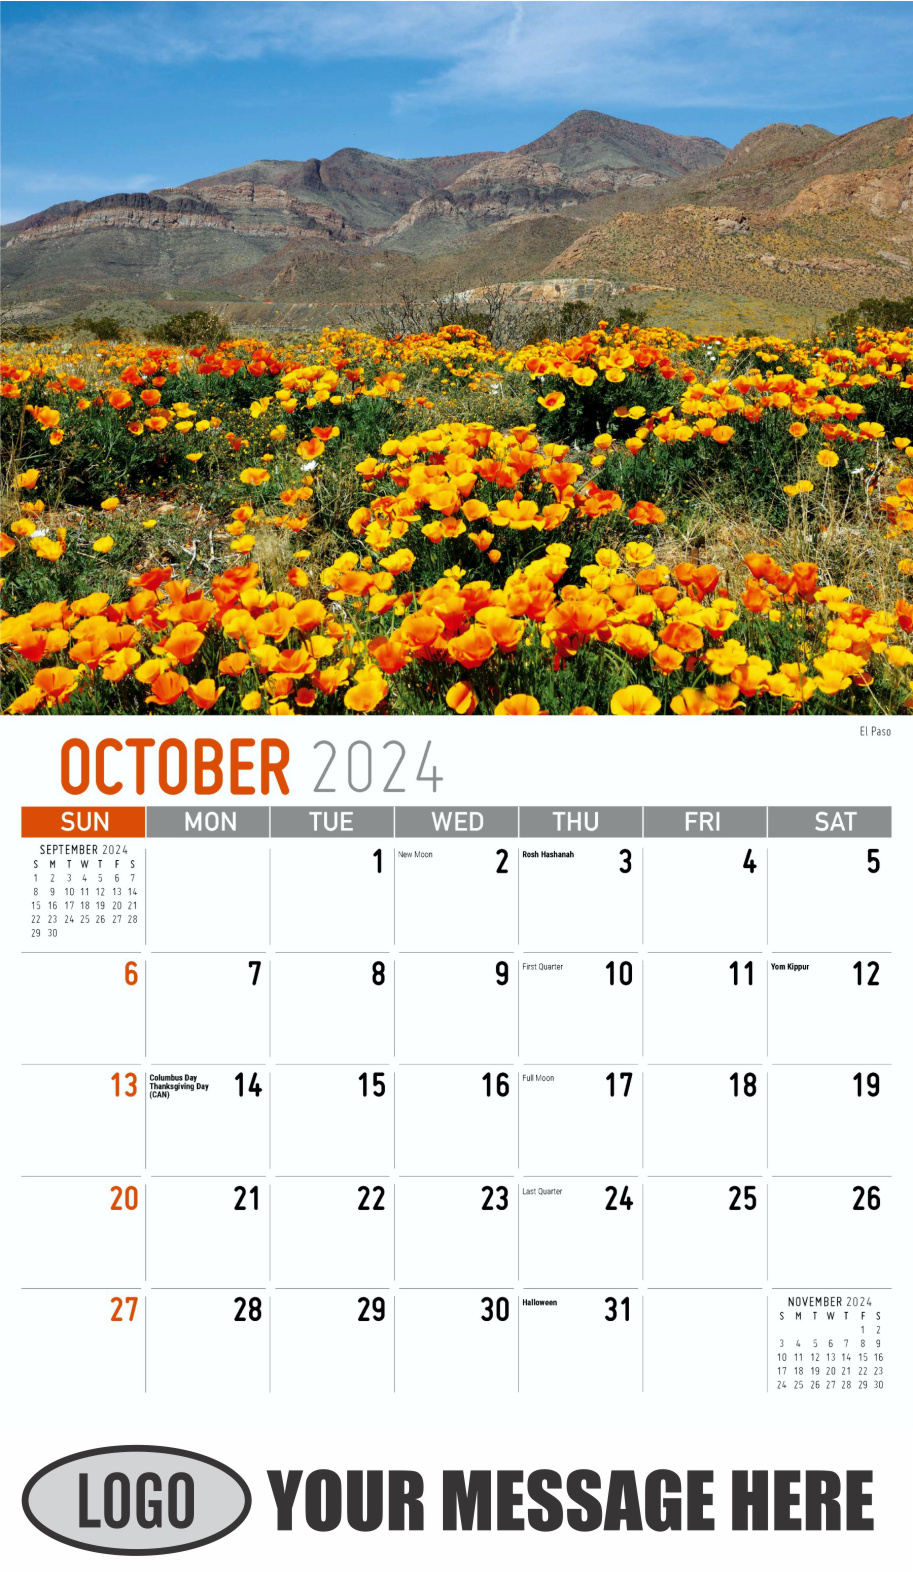 Scenes of Texas 2024 Business Advertising Calendar - October